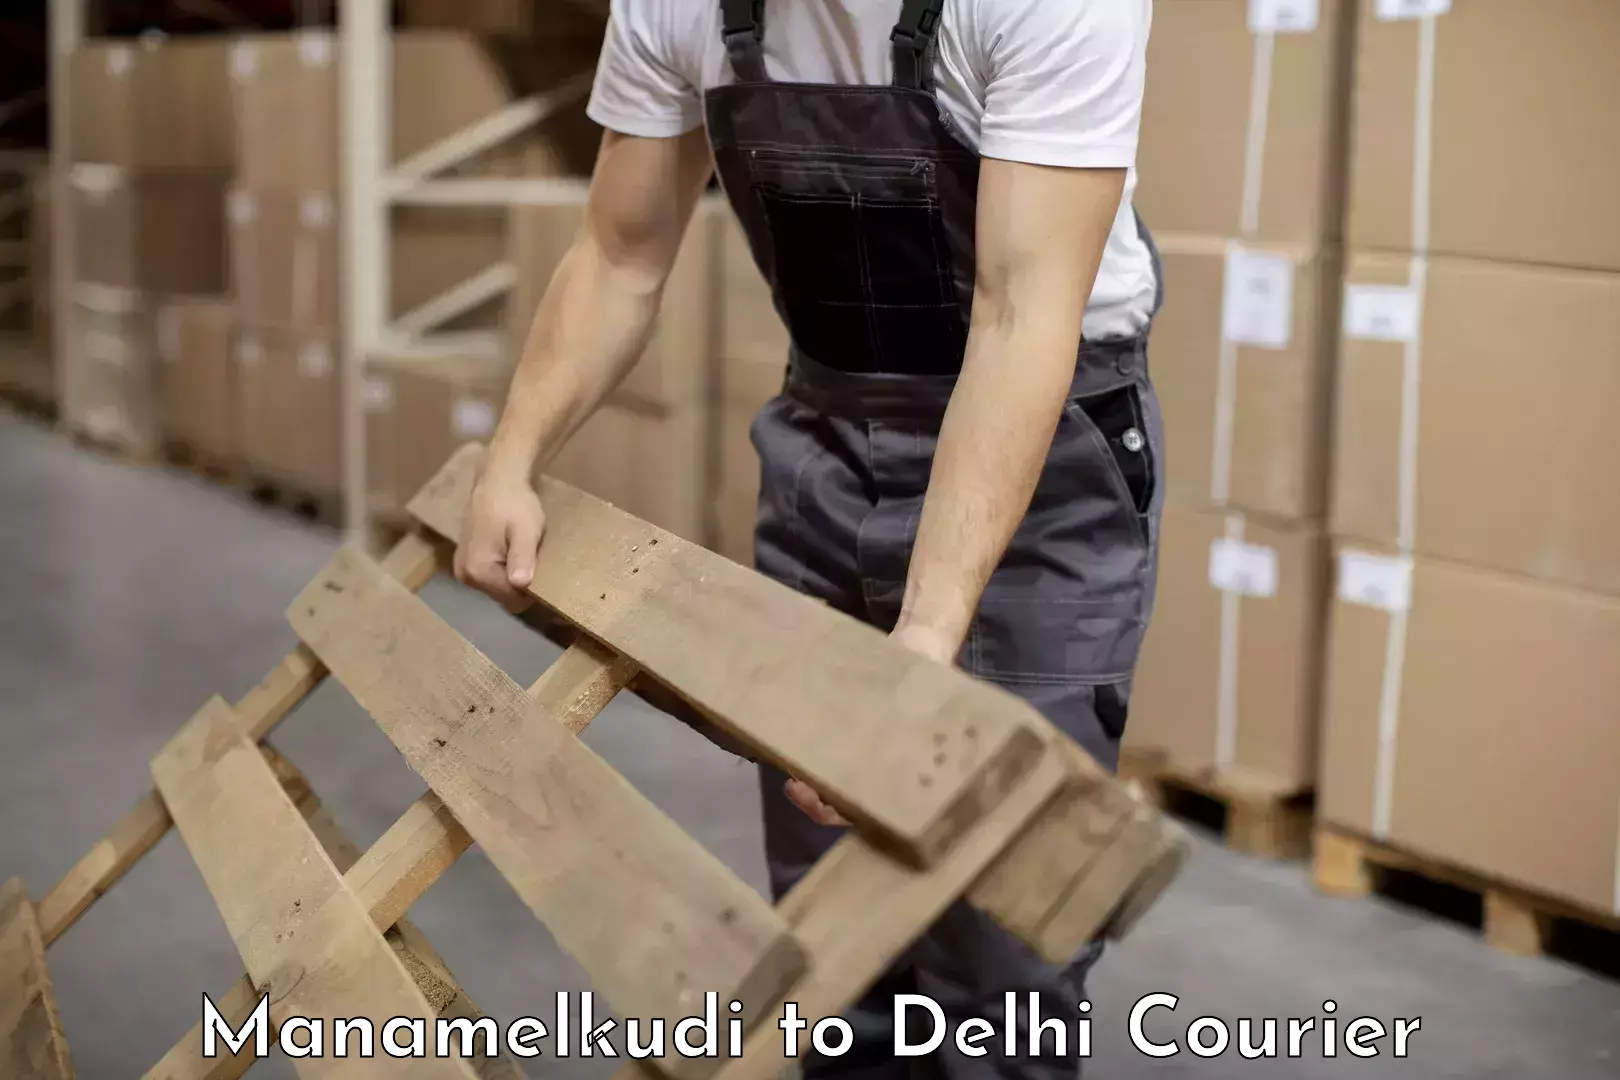 Quality moving company Manamelkudi to IIT Delhi